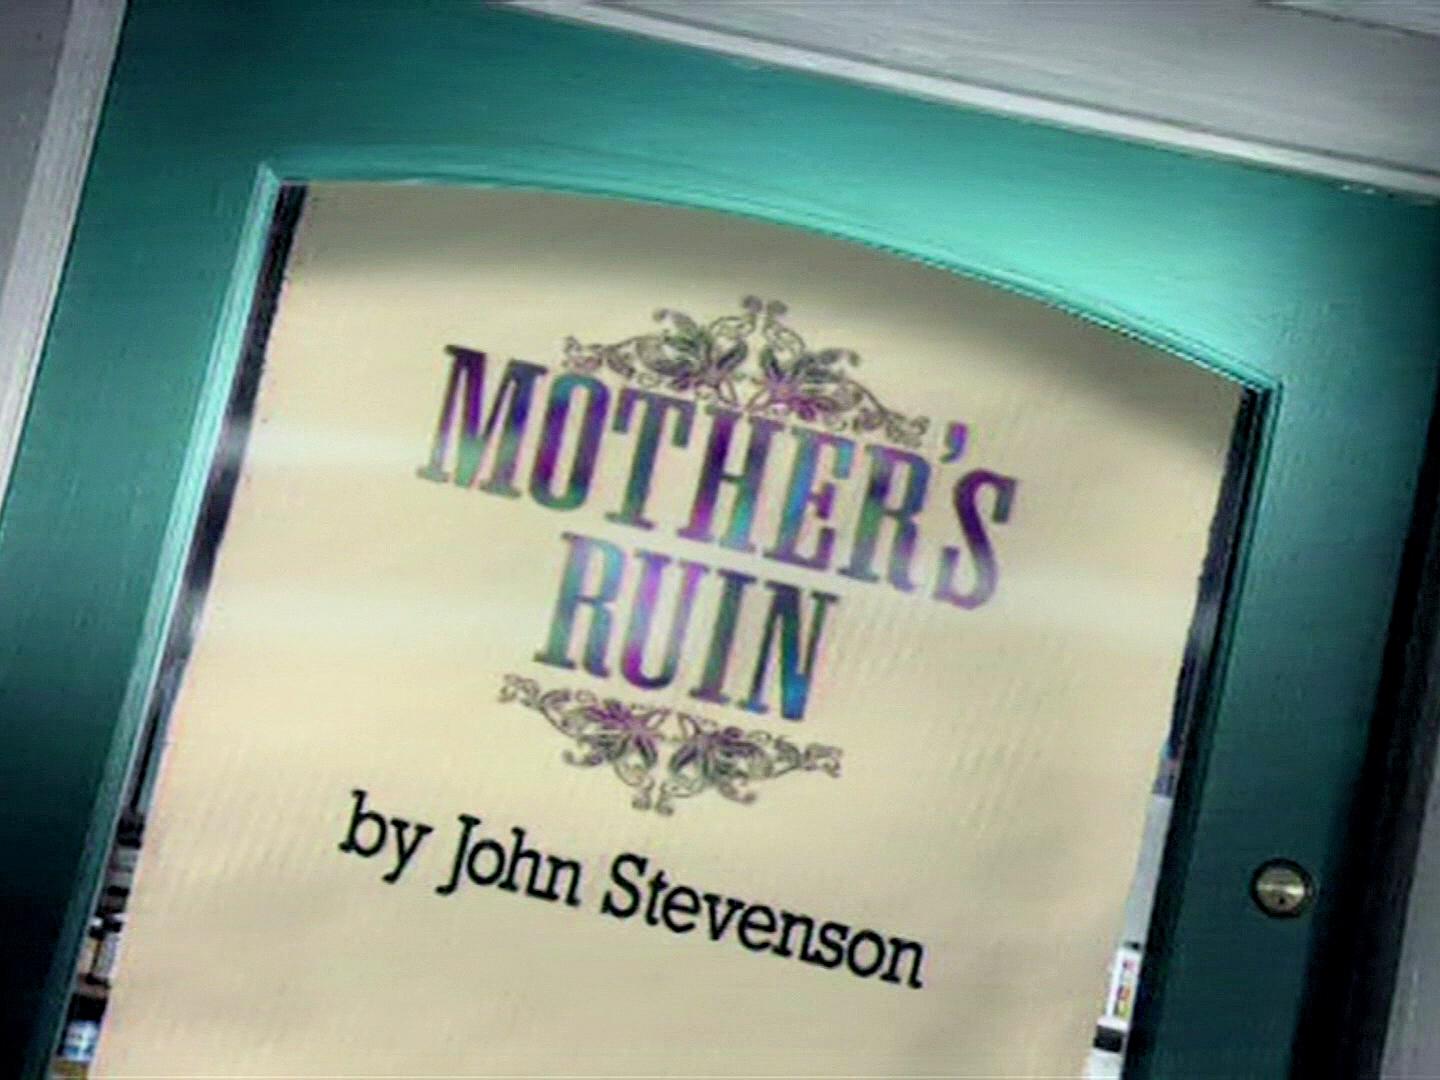 Main title from Mother’s Ruin (1994) (1). By John Stevenson